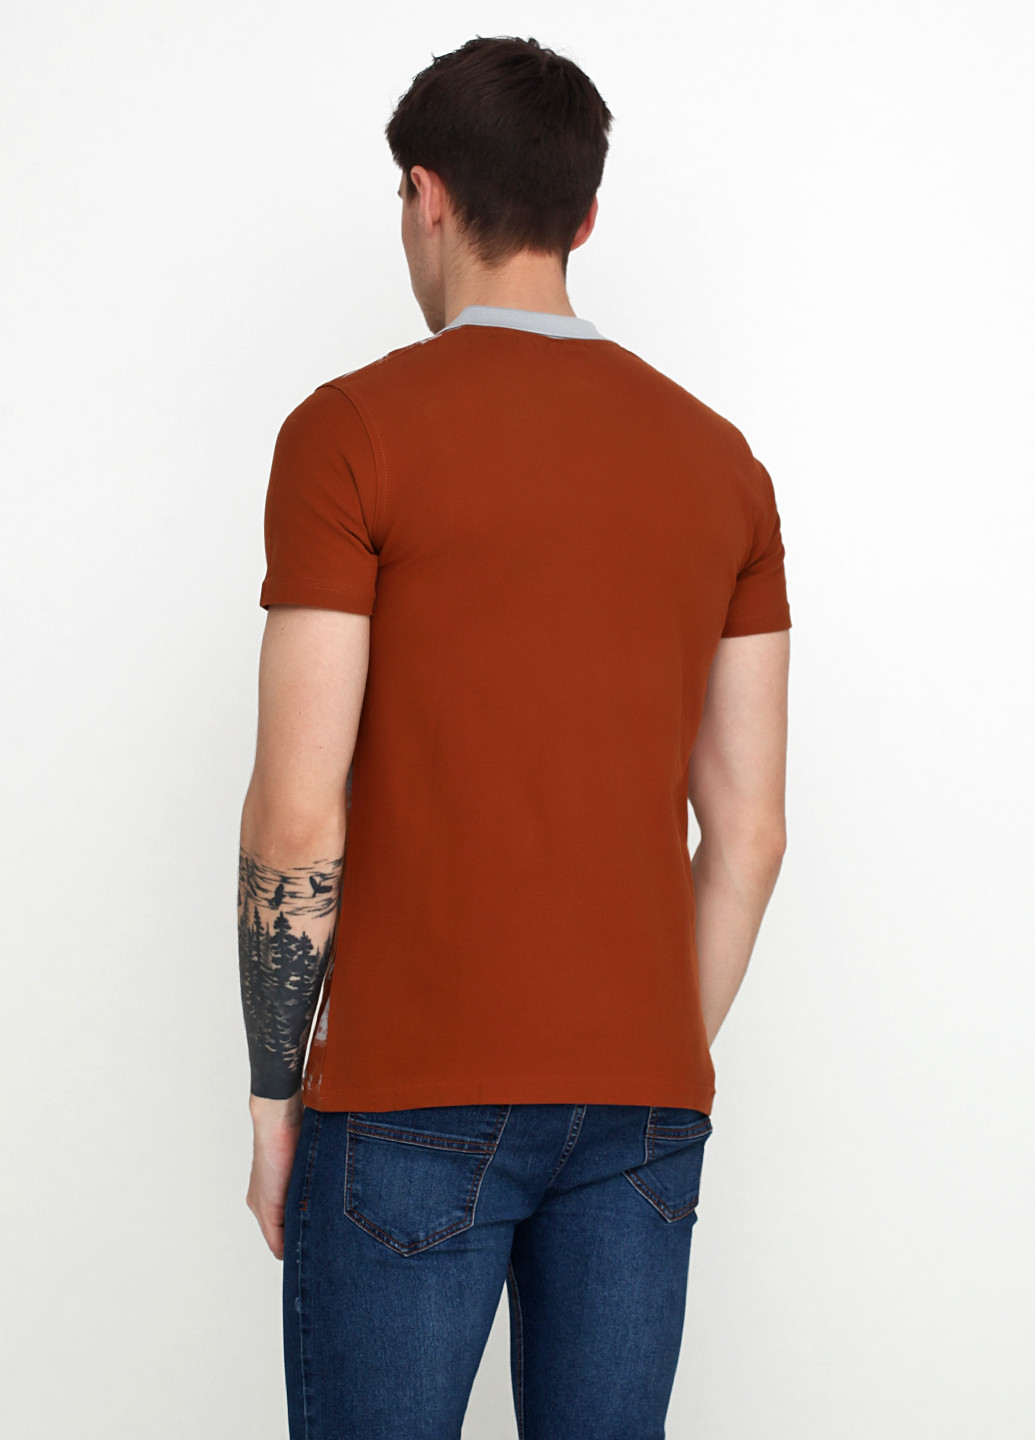 Светло-коричневая футболка-поло для мужчин West Wint с рисунком